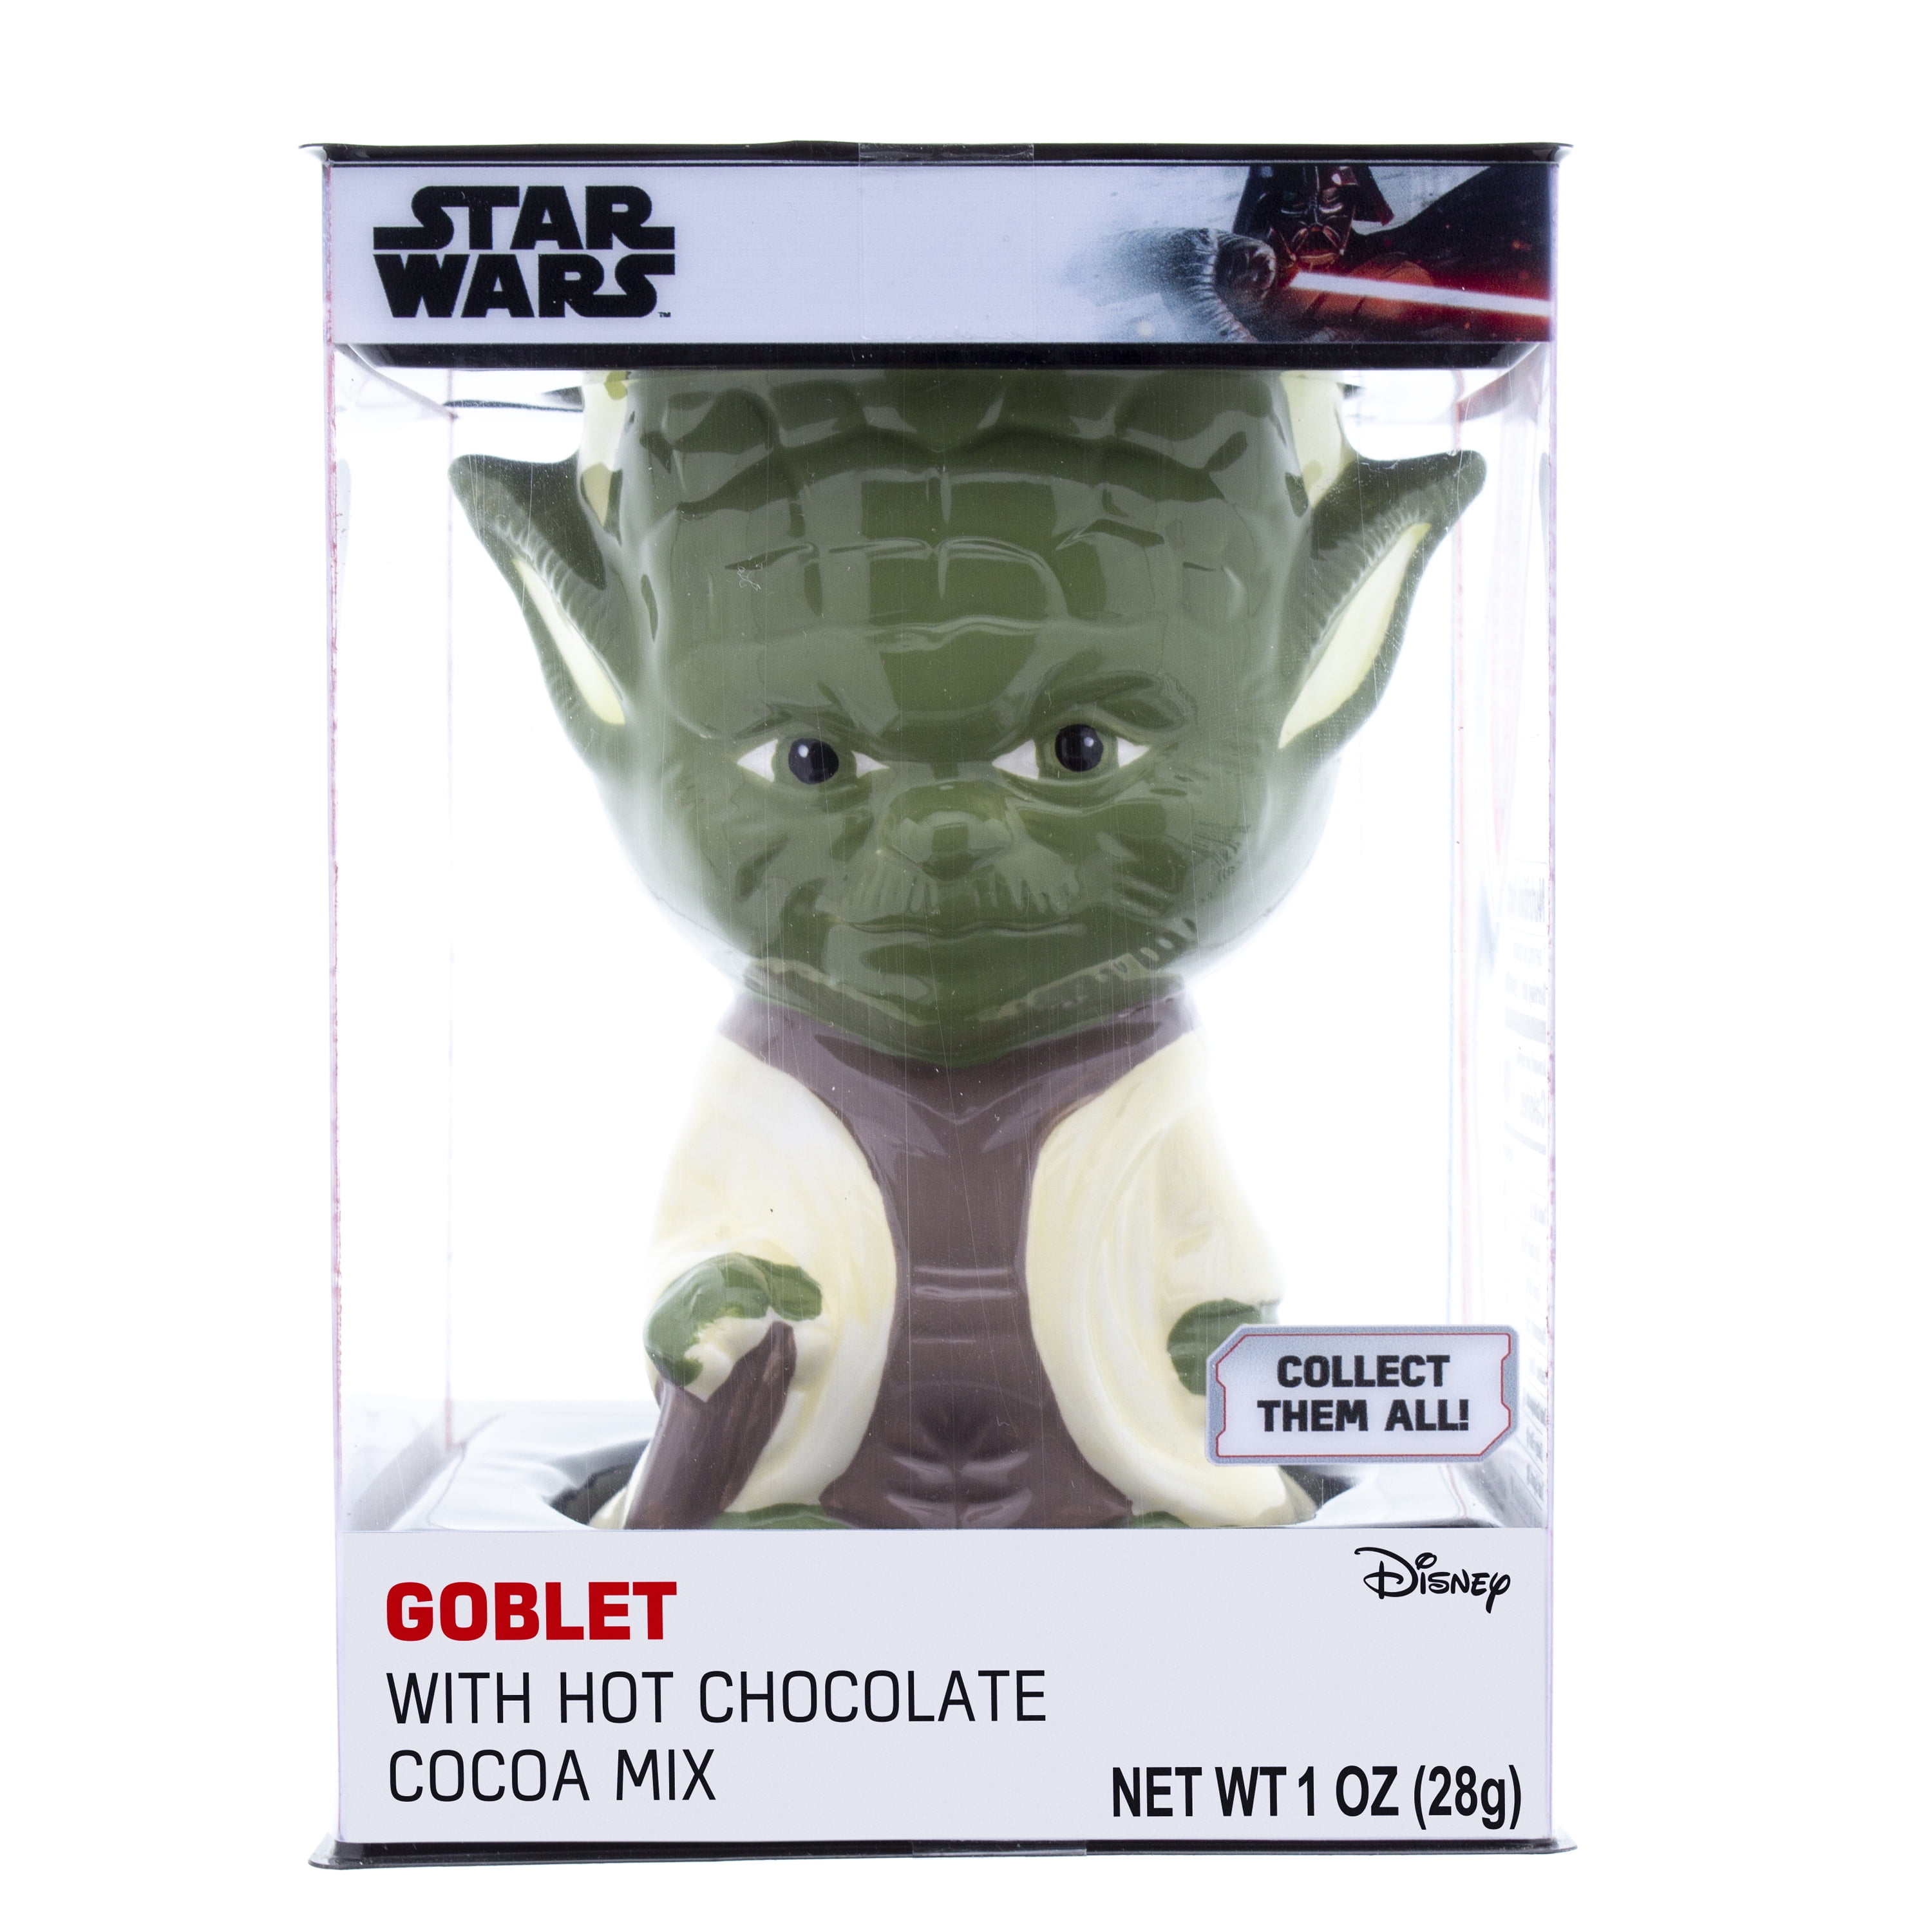 Star Wars Yoda 2013 Goblet